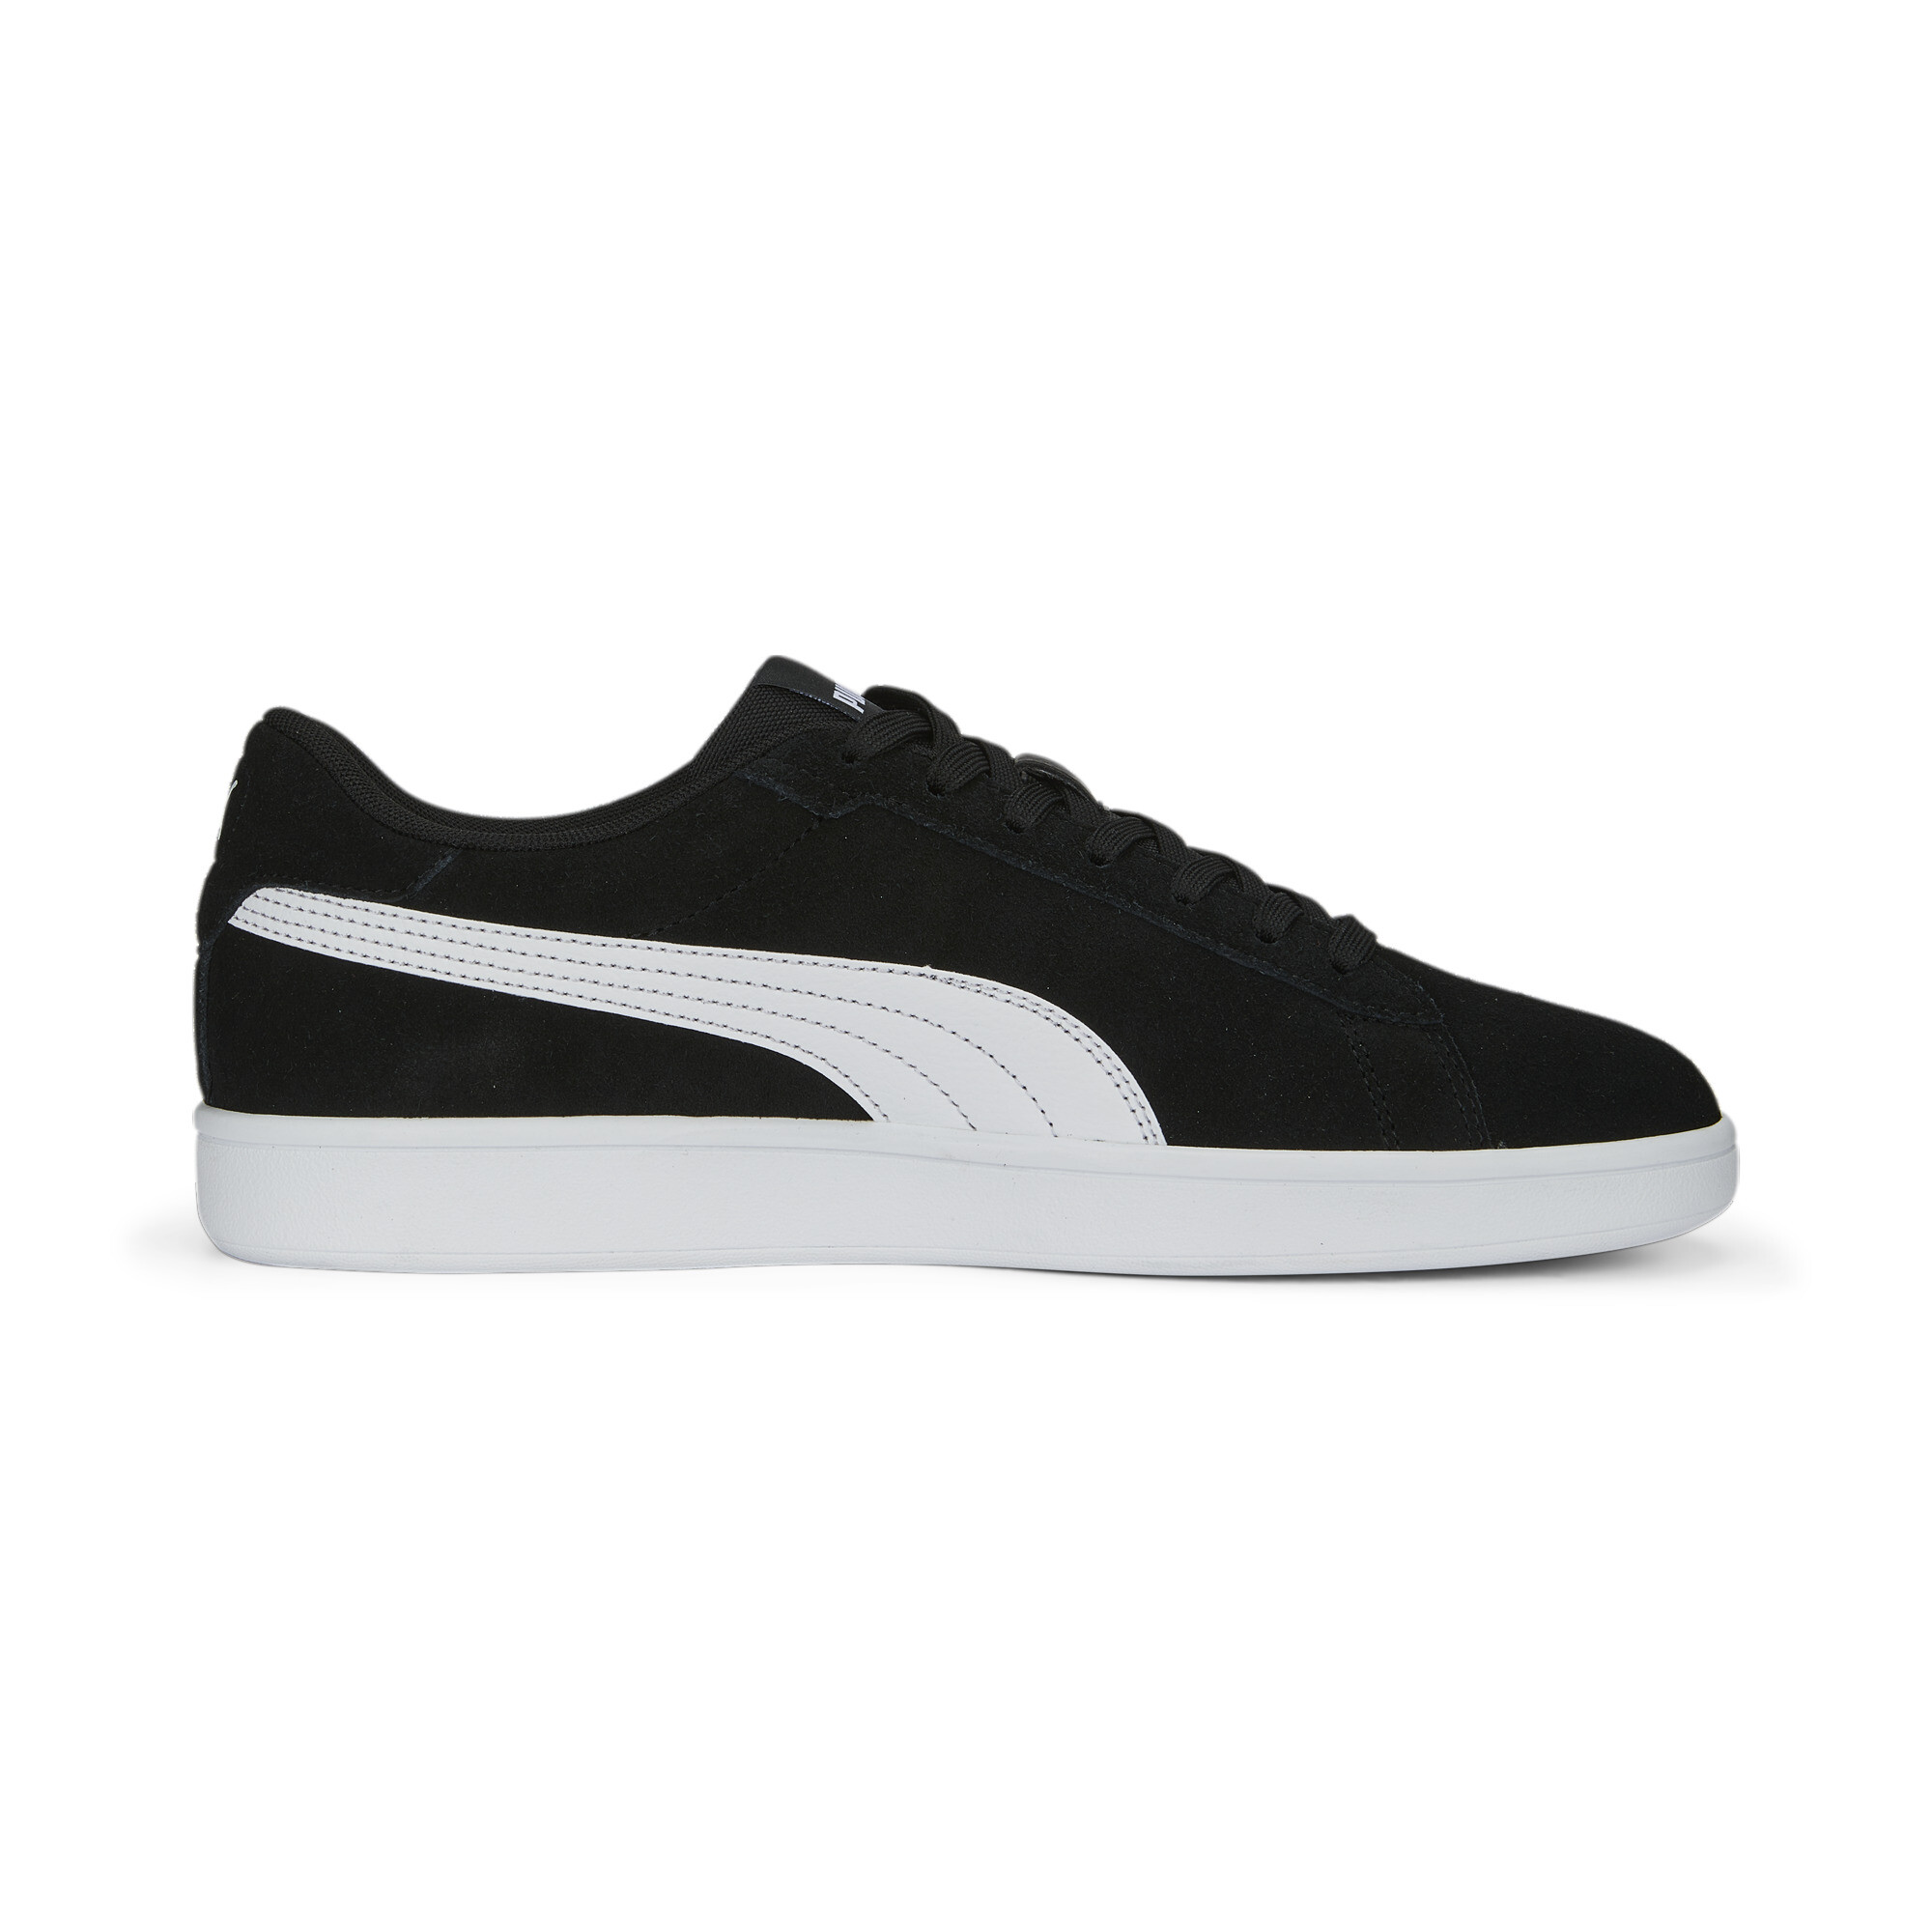 Puma Smash 3.0 Sneakers, Black, Size 47, Shoes